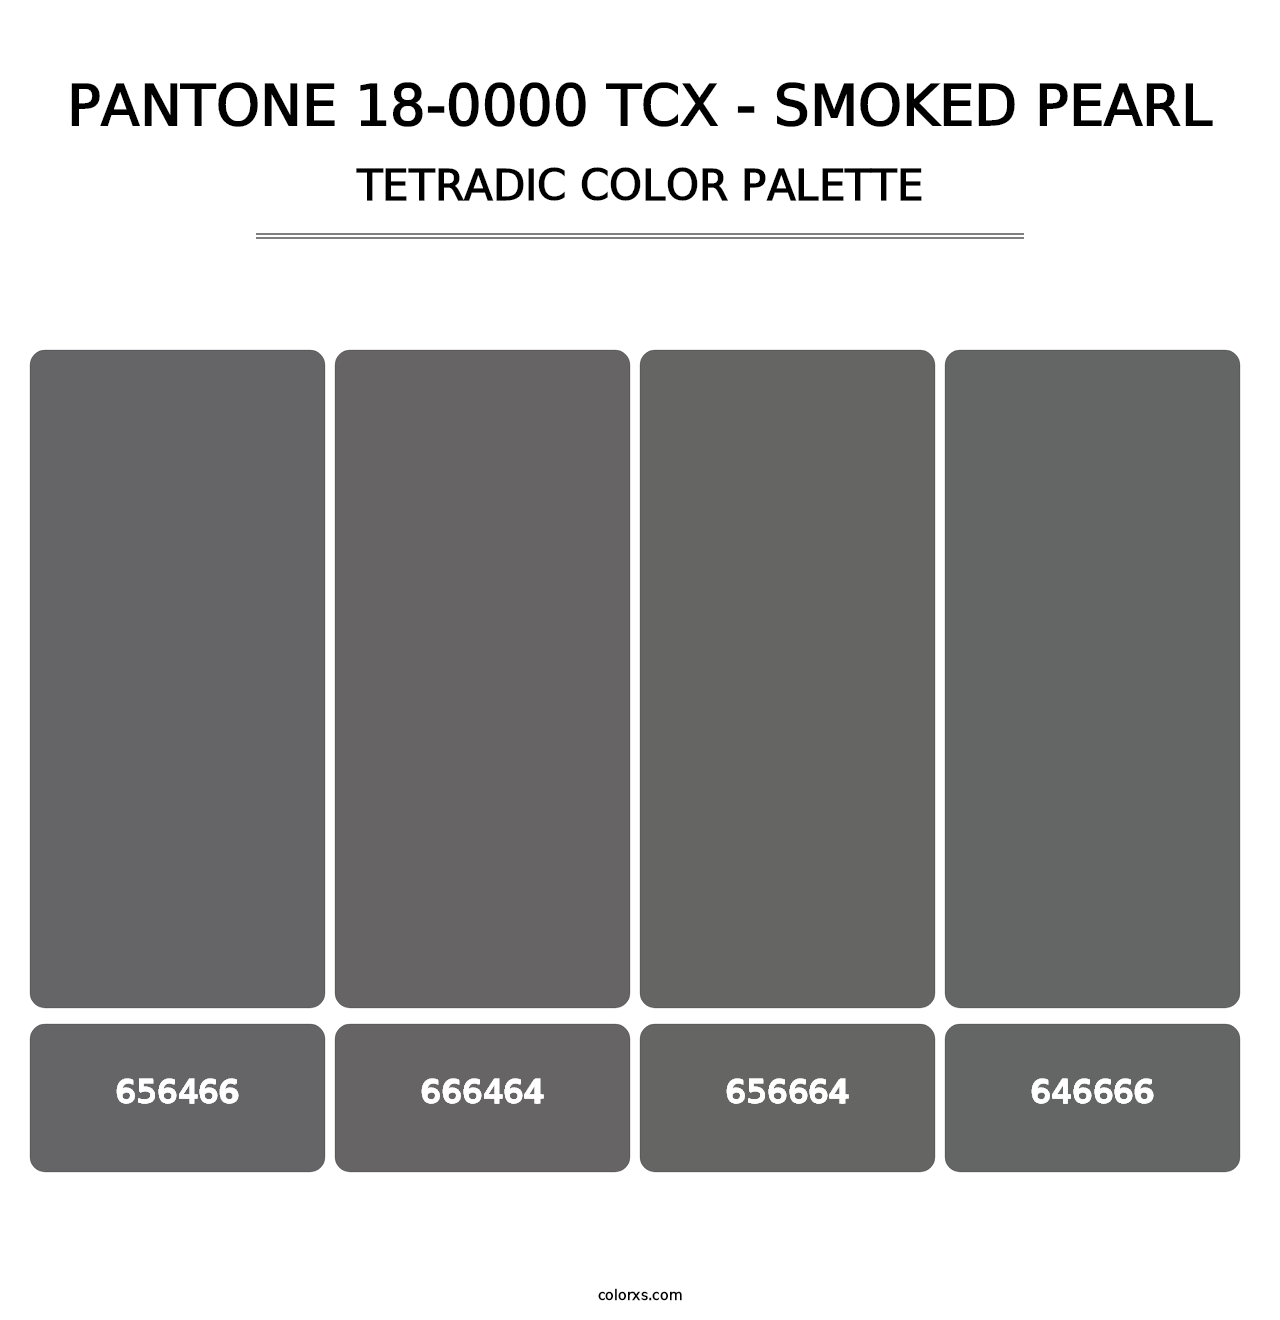 PANTONE 18-0000 TCX - Smoked Pearl - Tetradic Color Palette